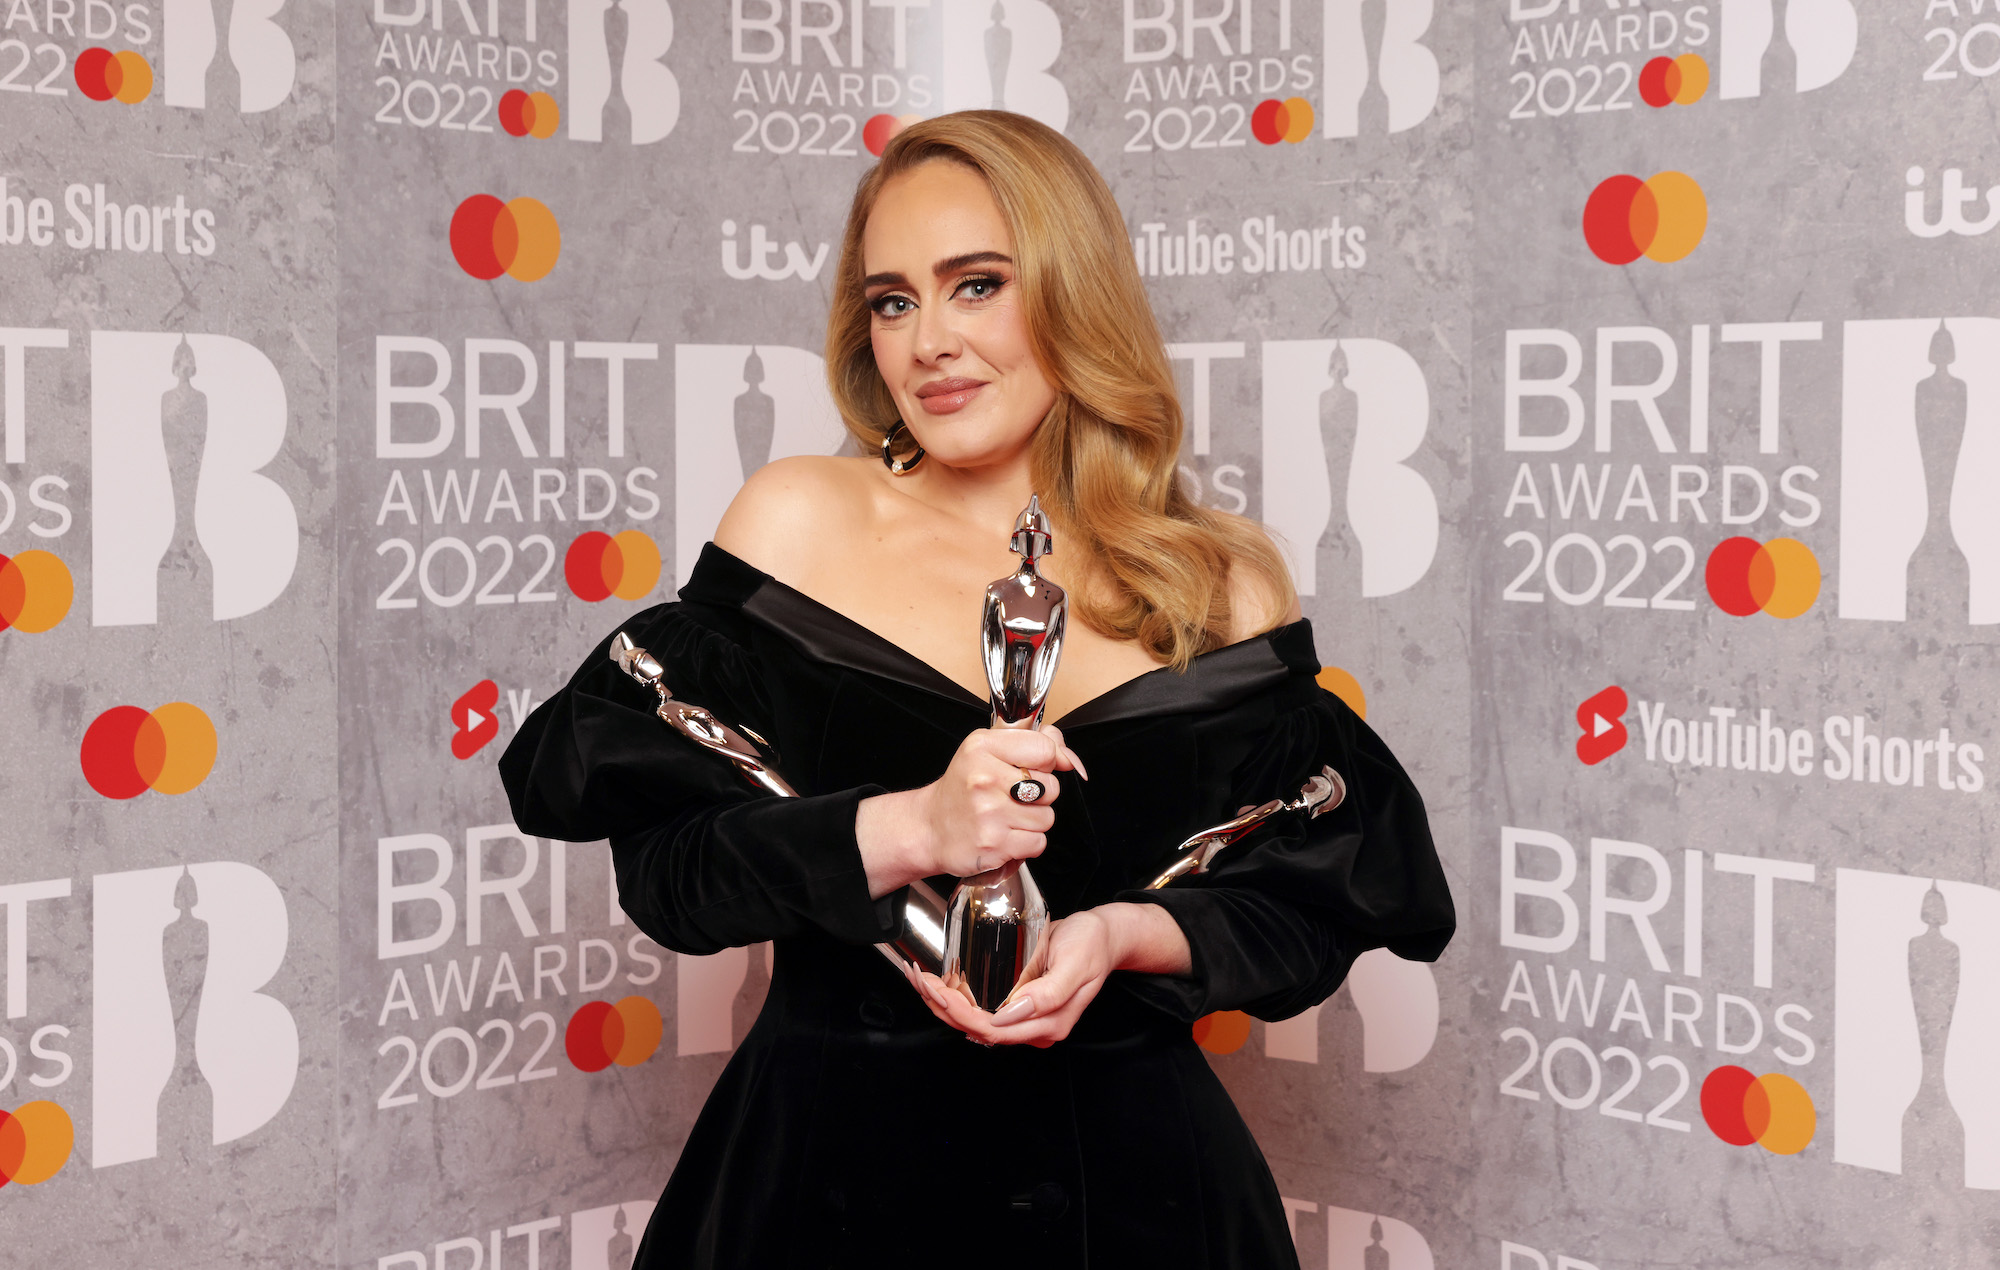 Brit Awards 2022: Η μεγάλη νικήτρια Adele και η λαμπερή τελετή